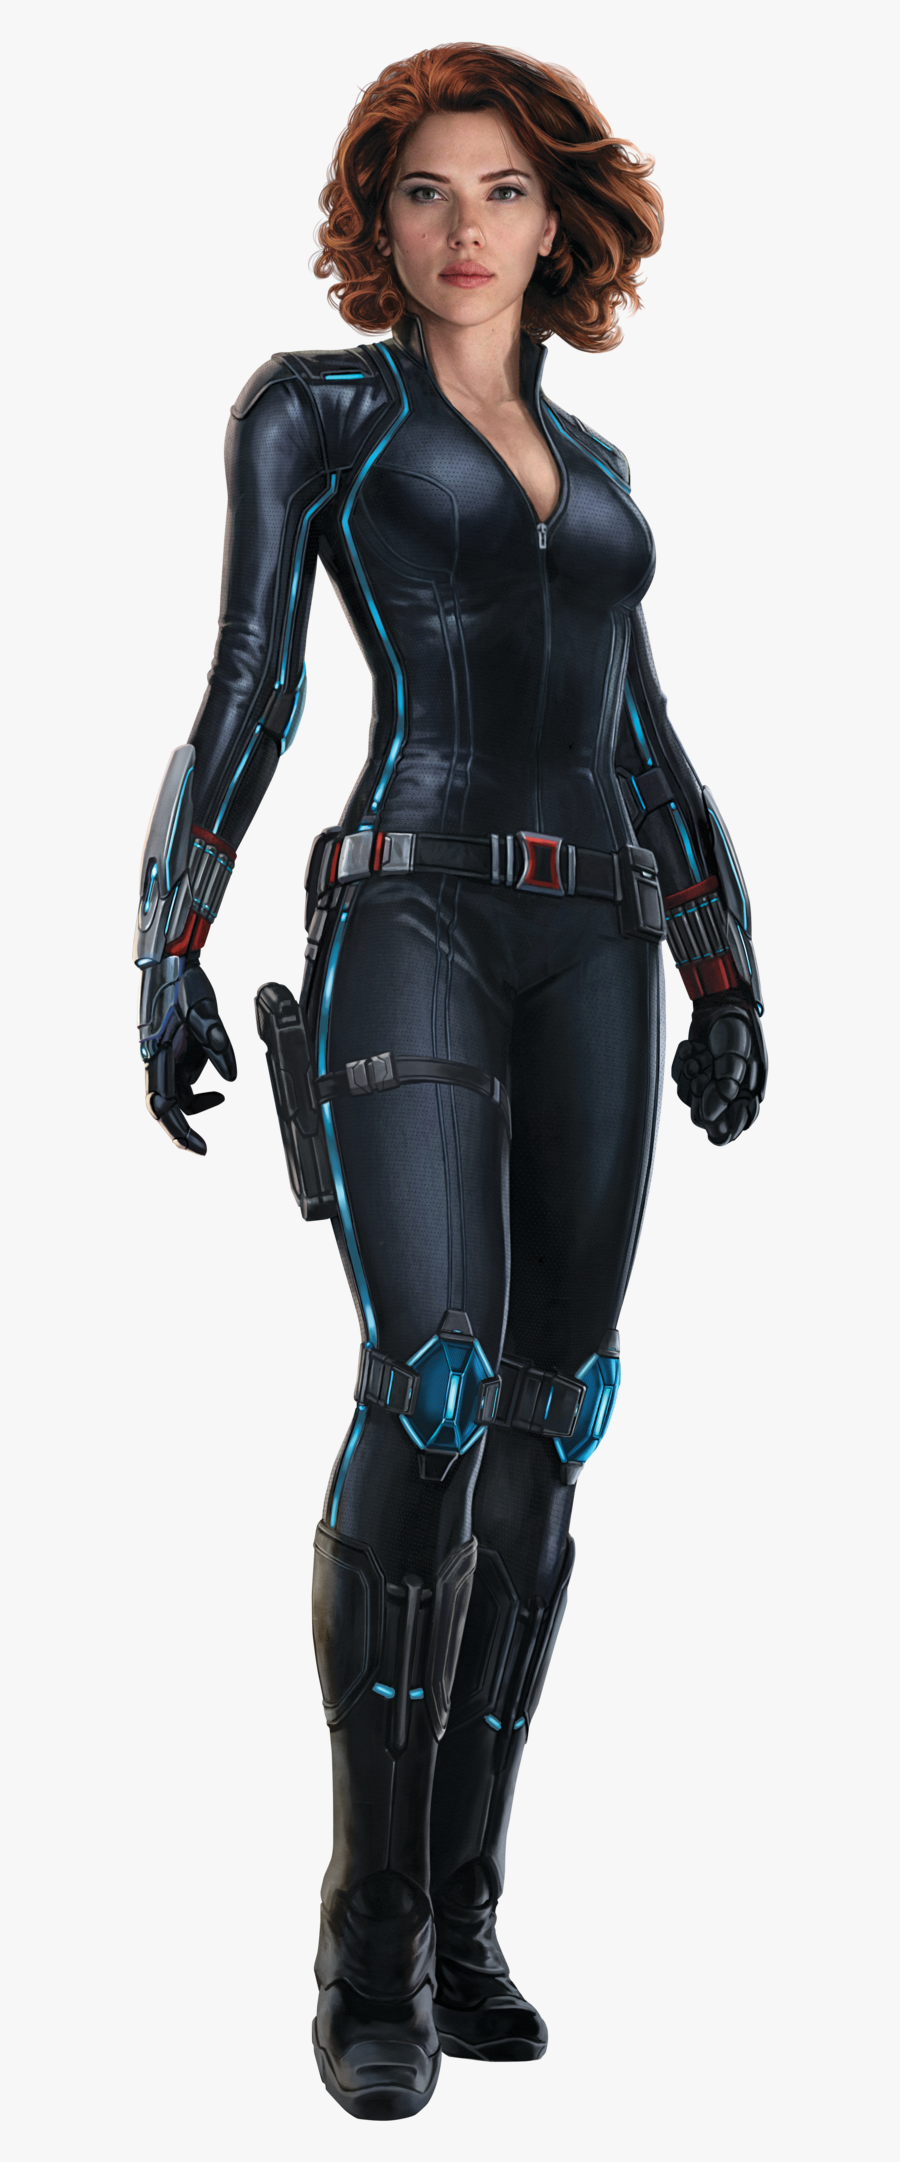 Avengers Black Widow Png, Transparent Clipart